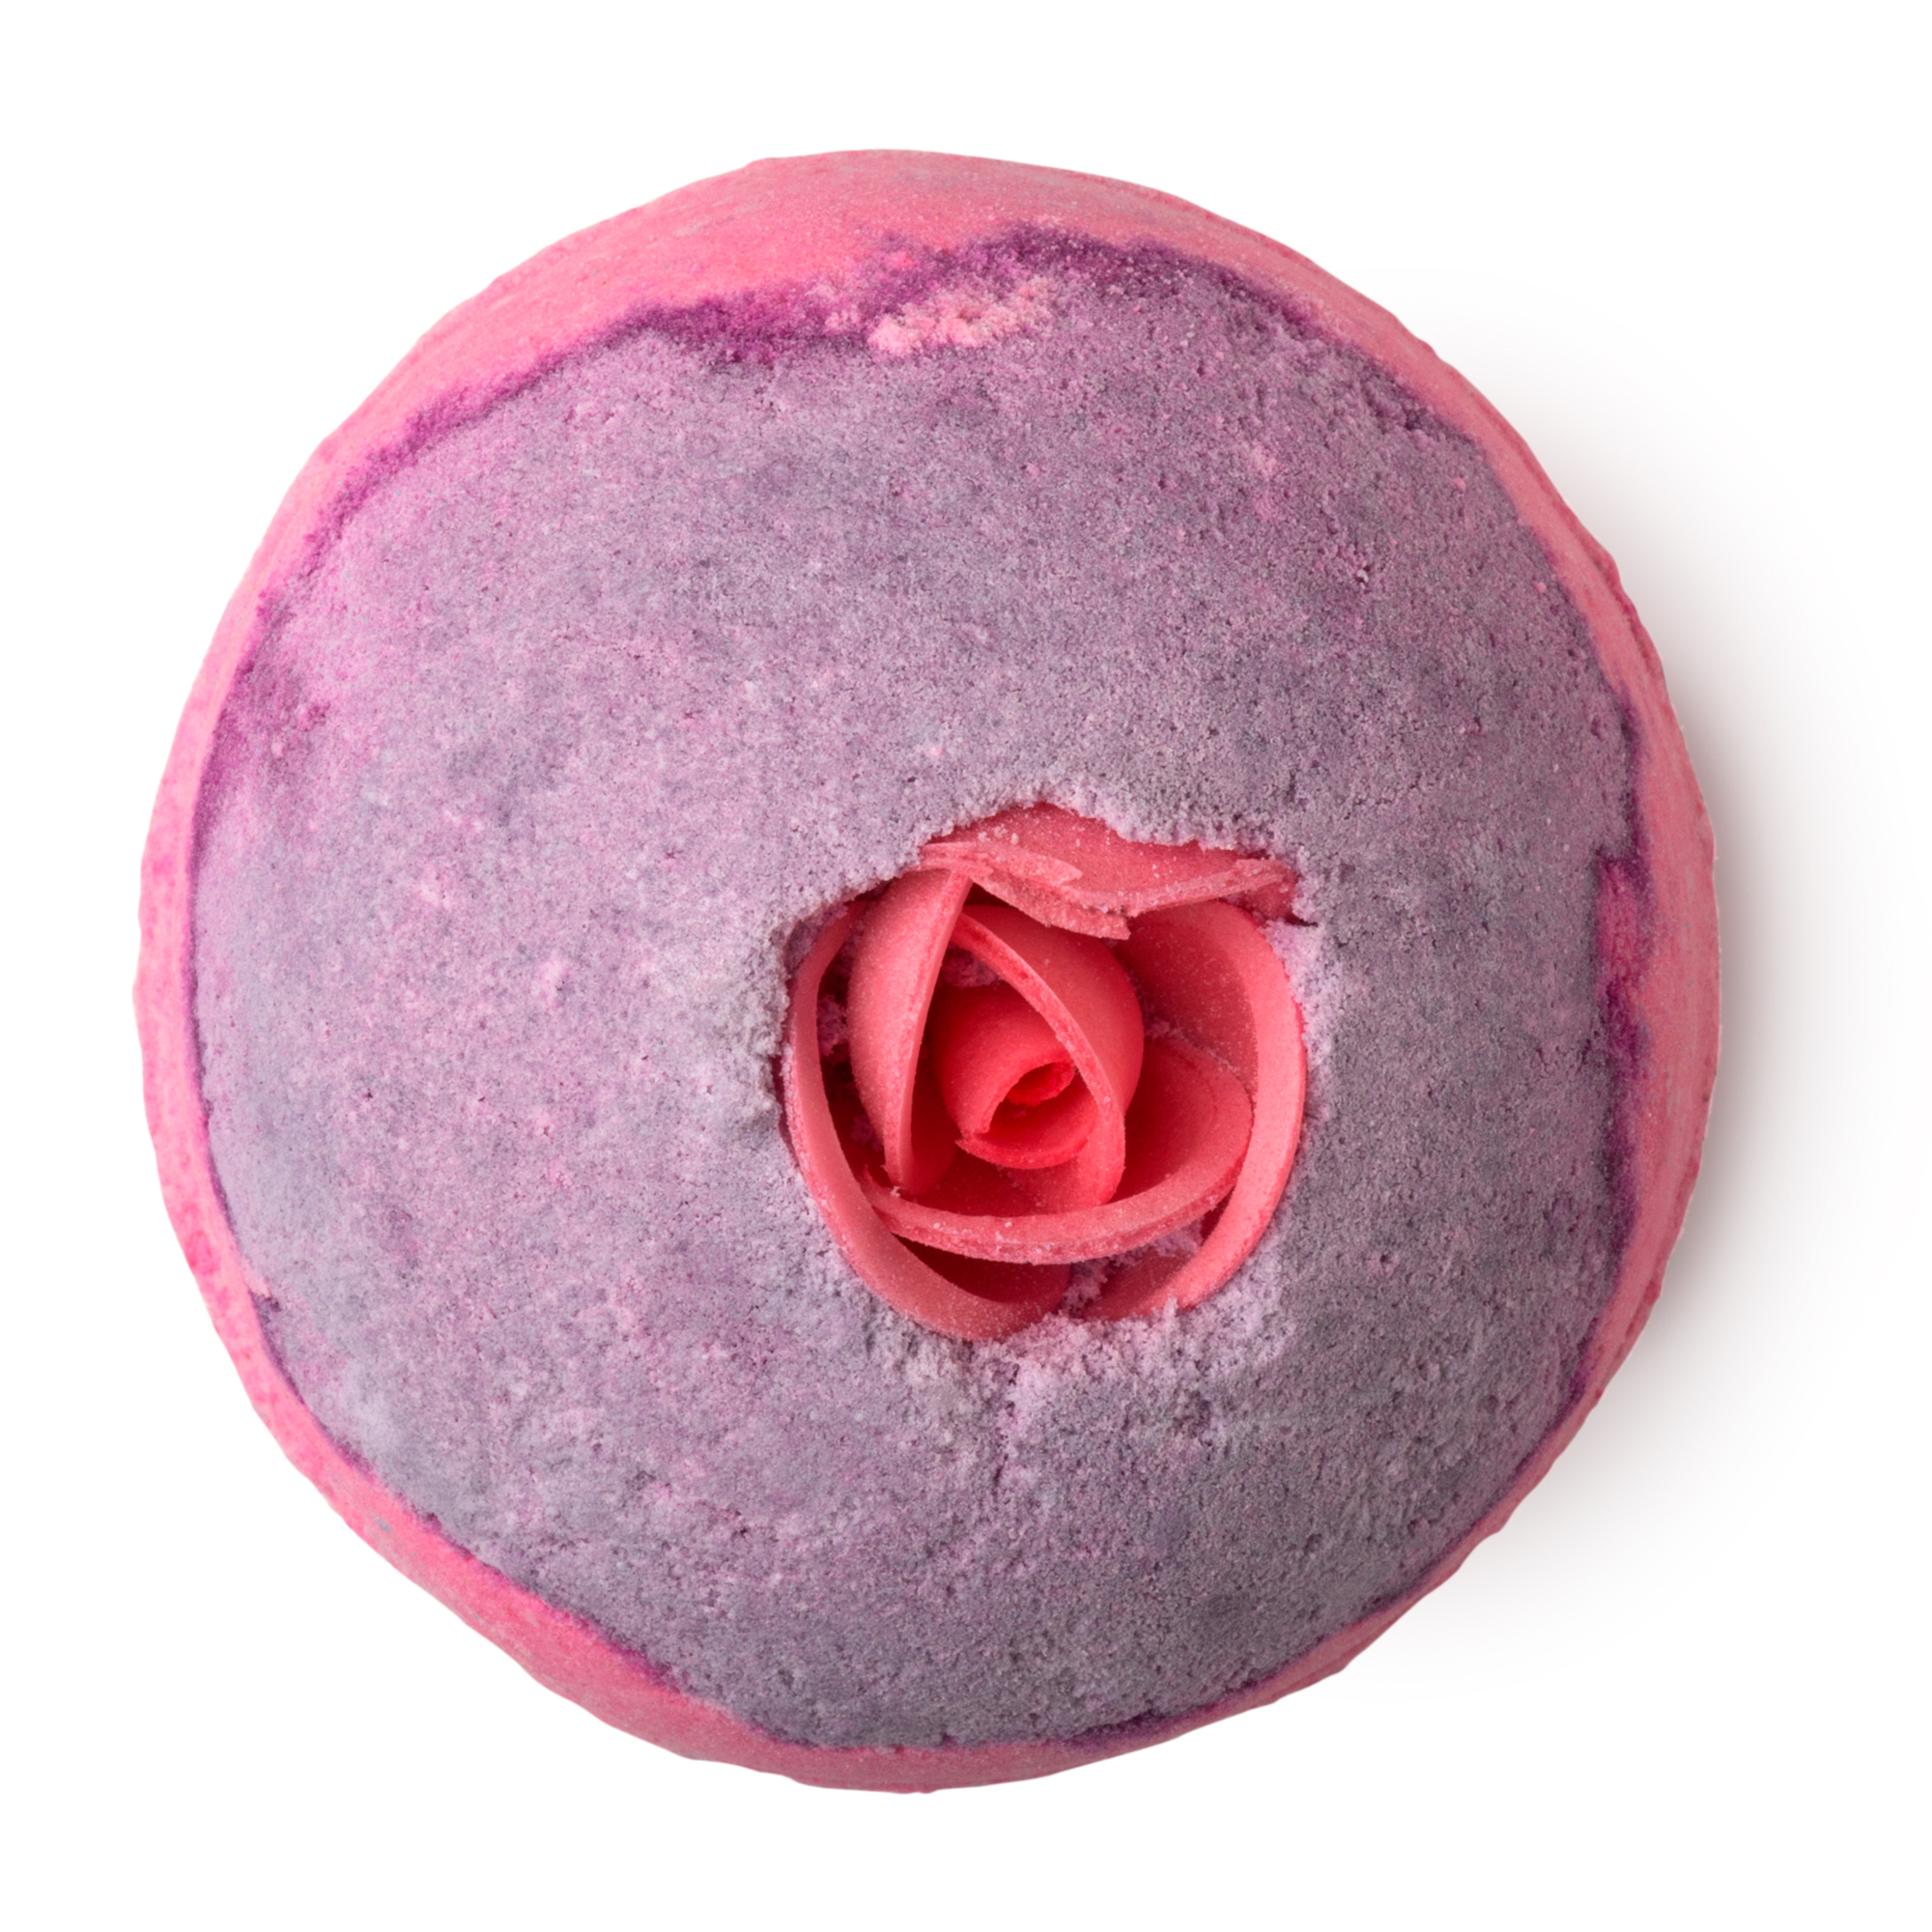 pink rose bath bomb